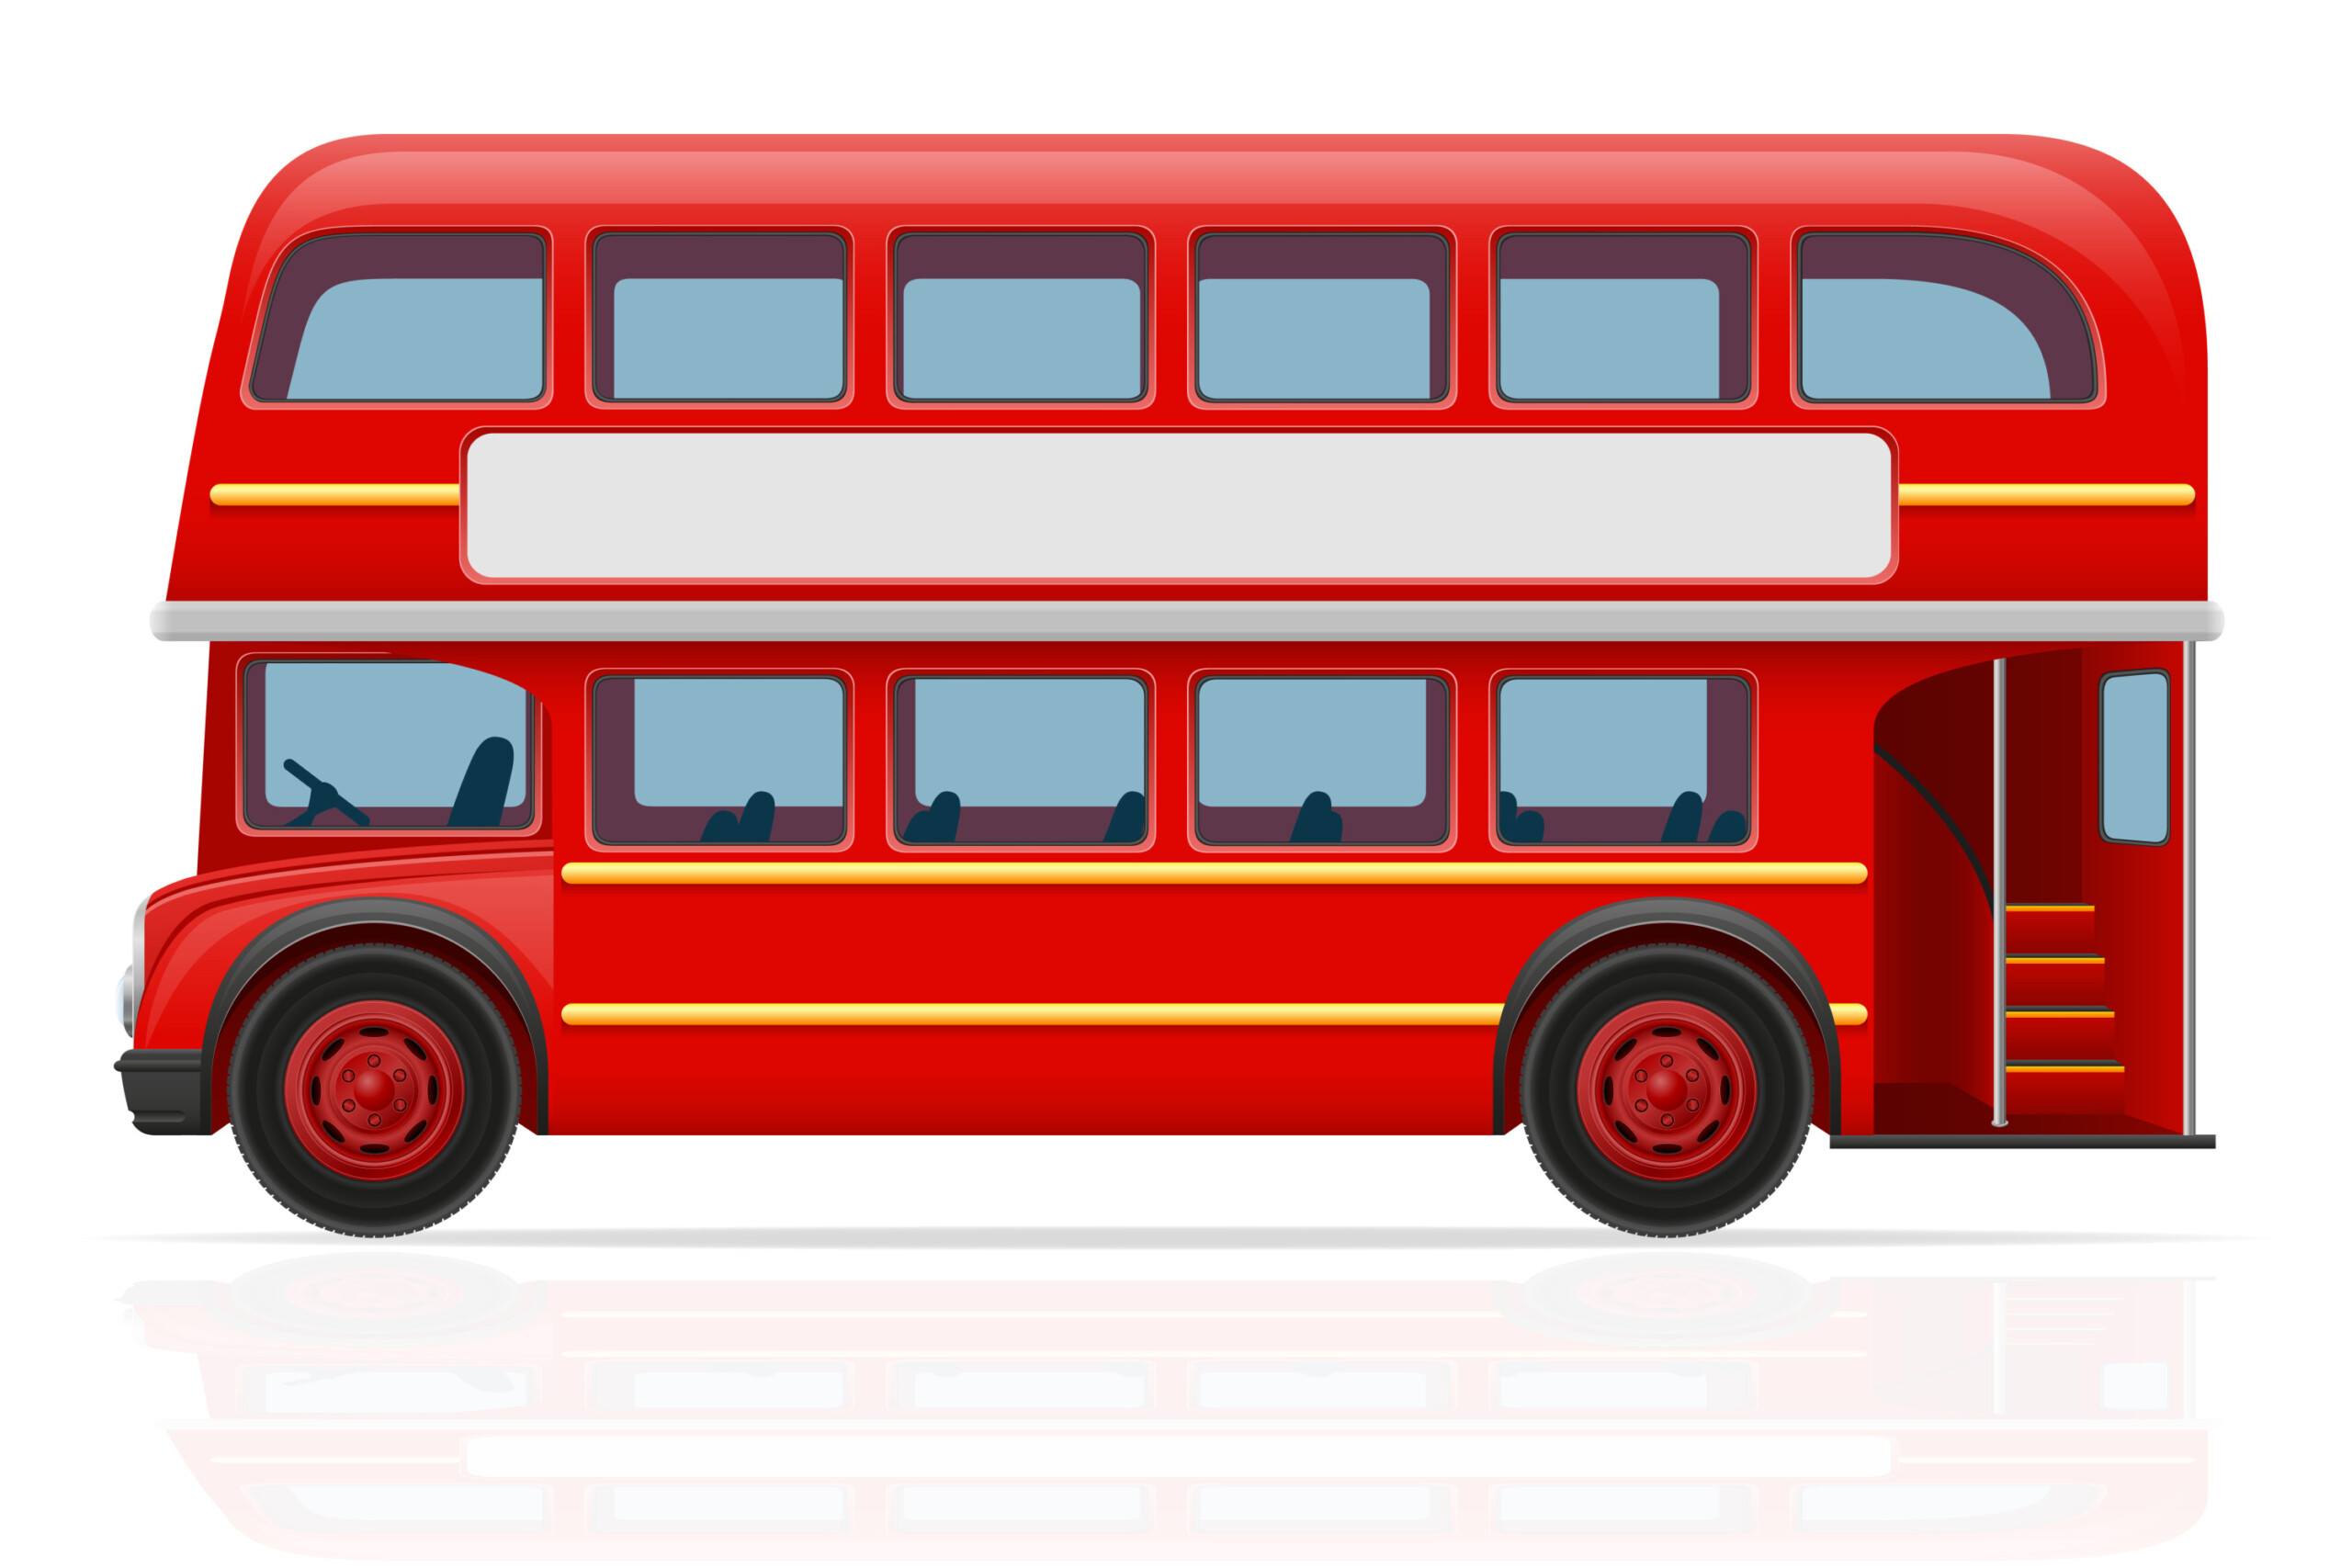 London Red Bus - Original image